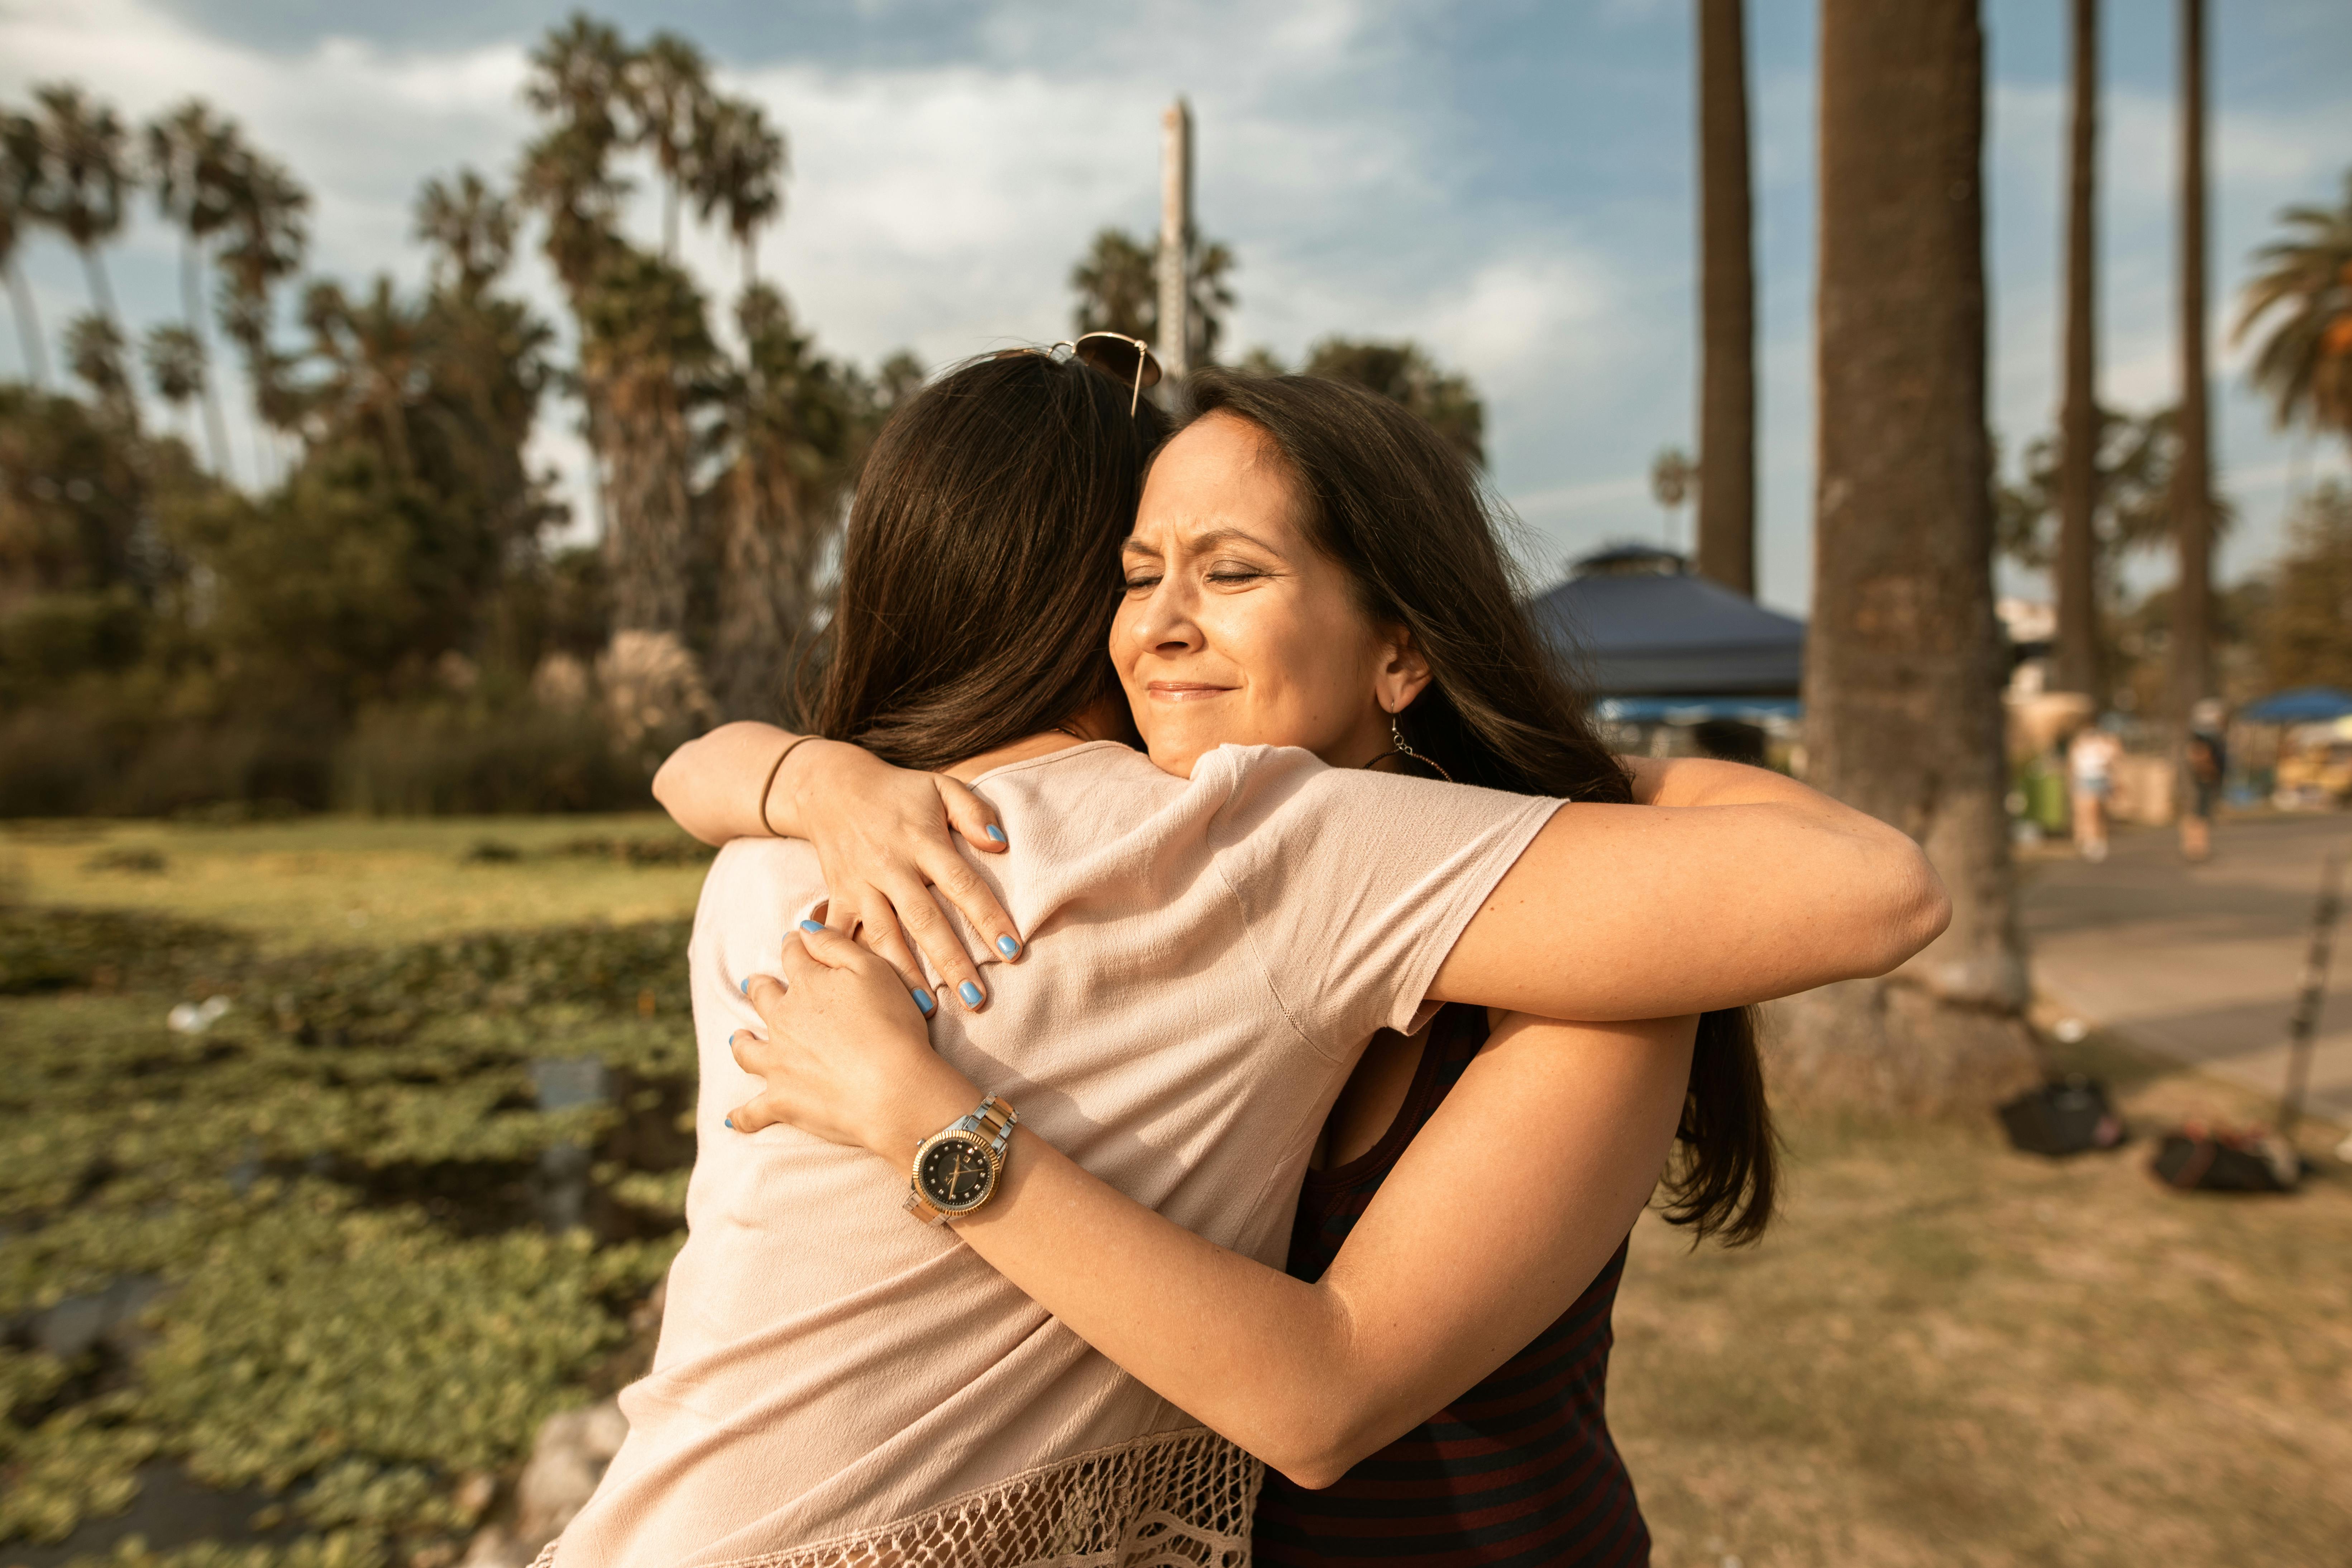 Two women hugging | Source: Mental Health America (MHA) on Pexels